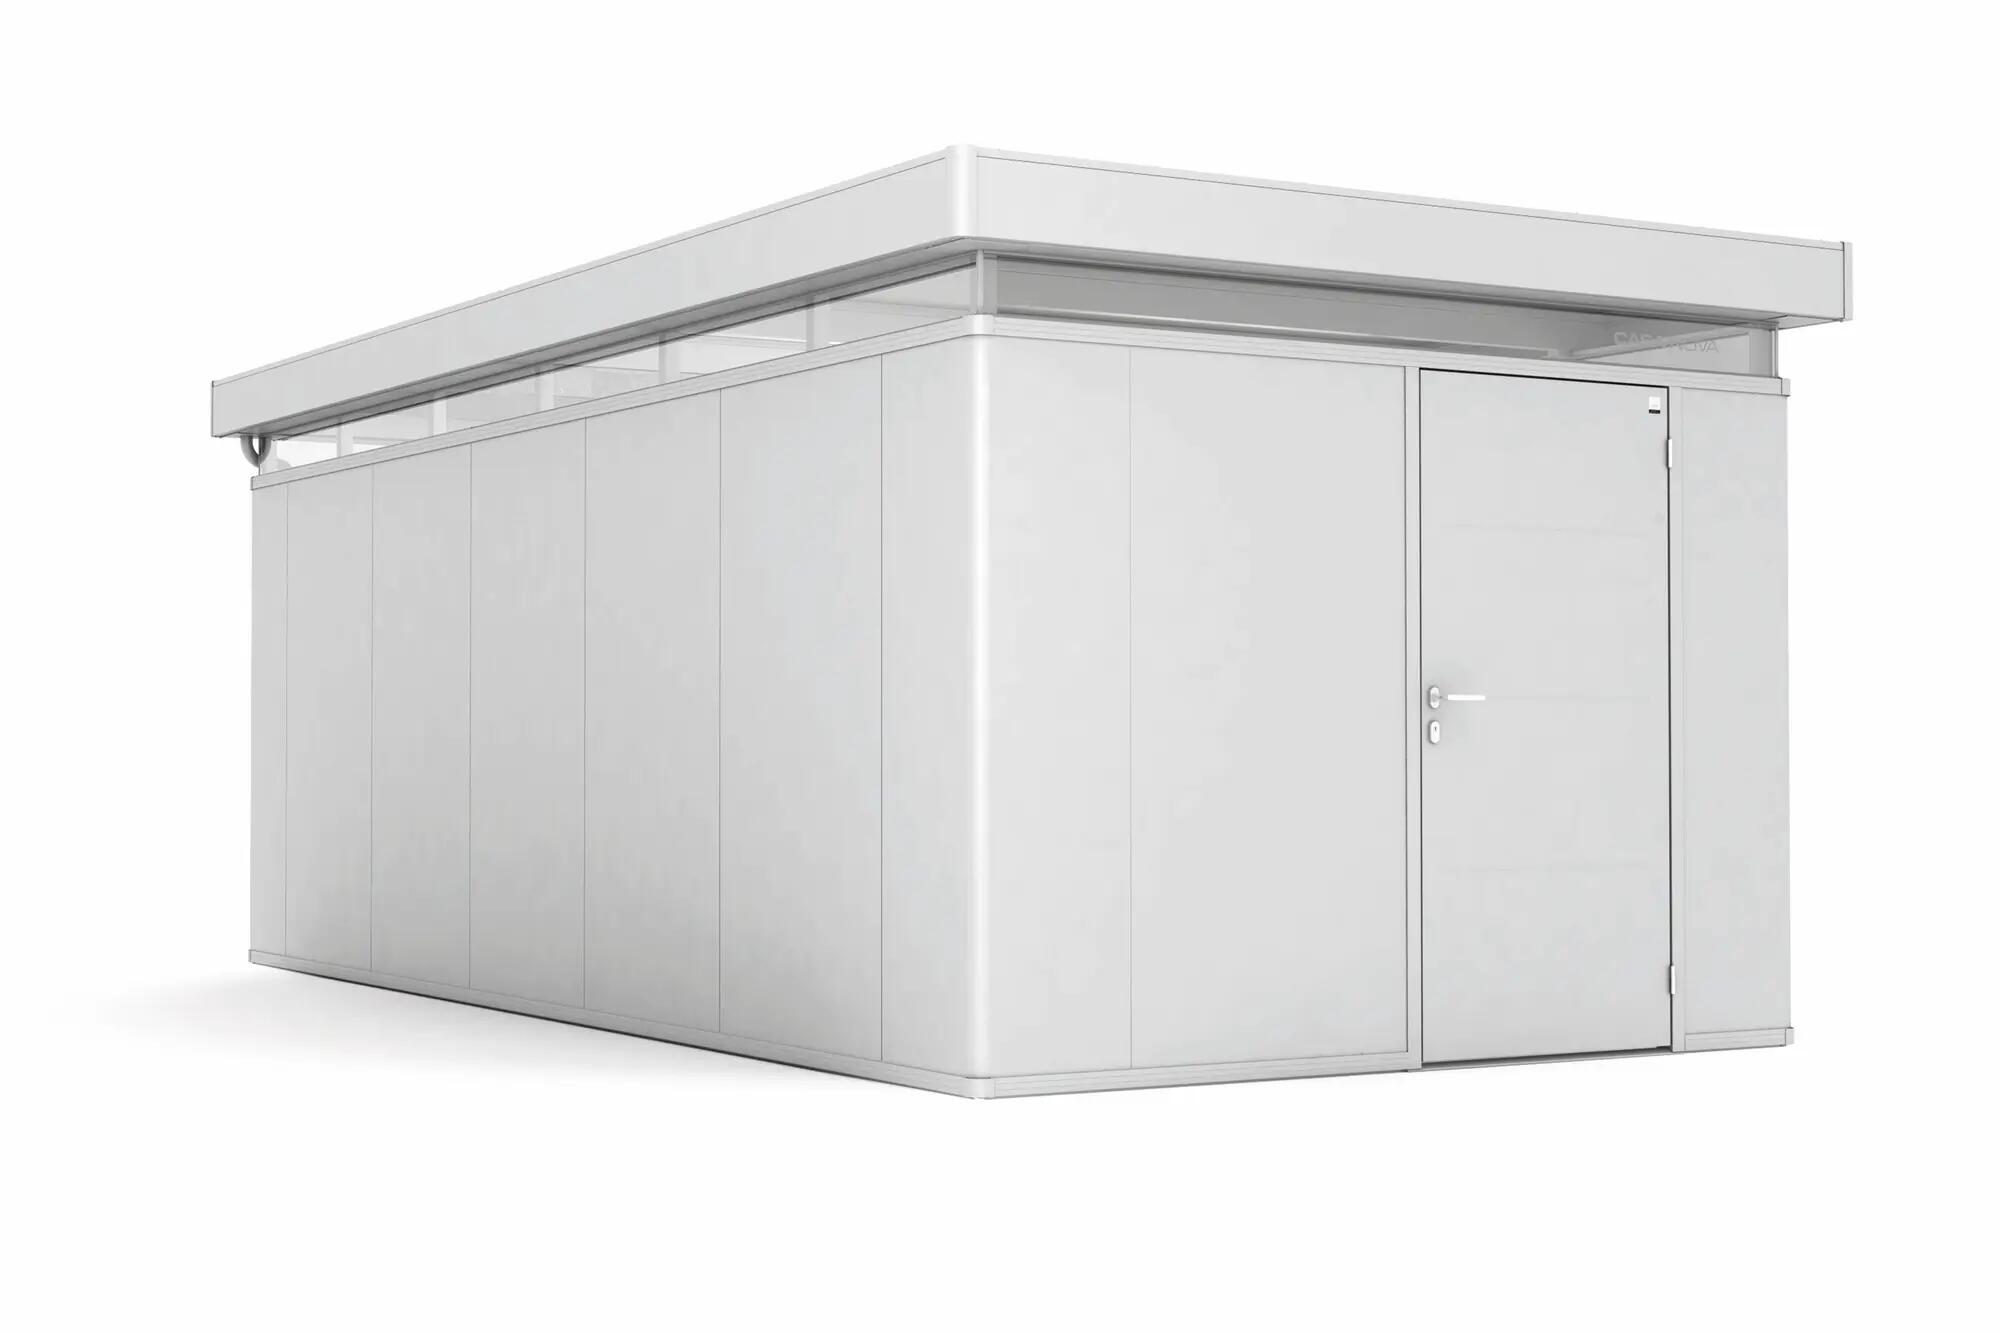 Caseta de metal plata derecha casanova de 330x250x630 cm y 20.79 m2